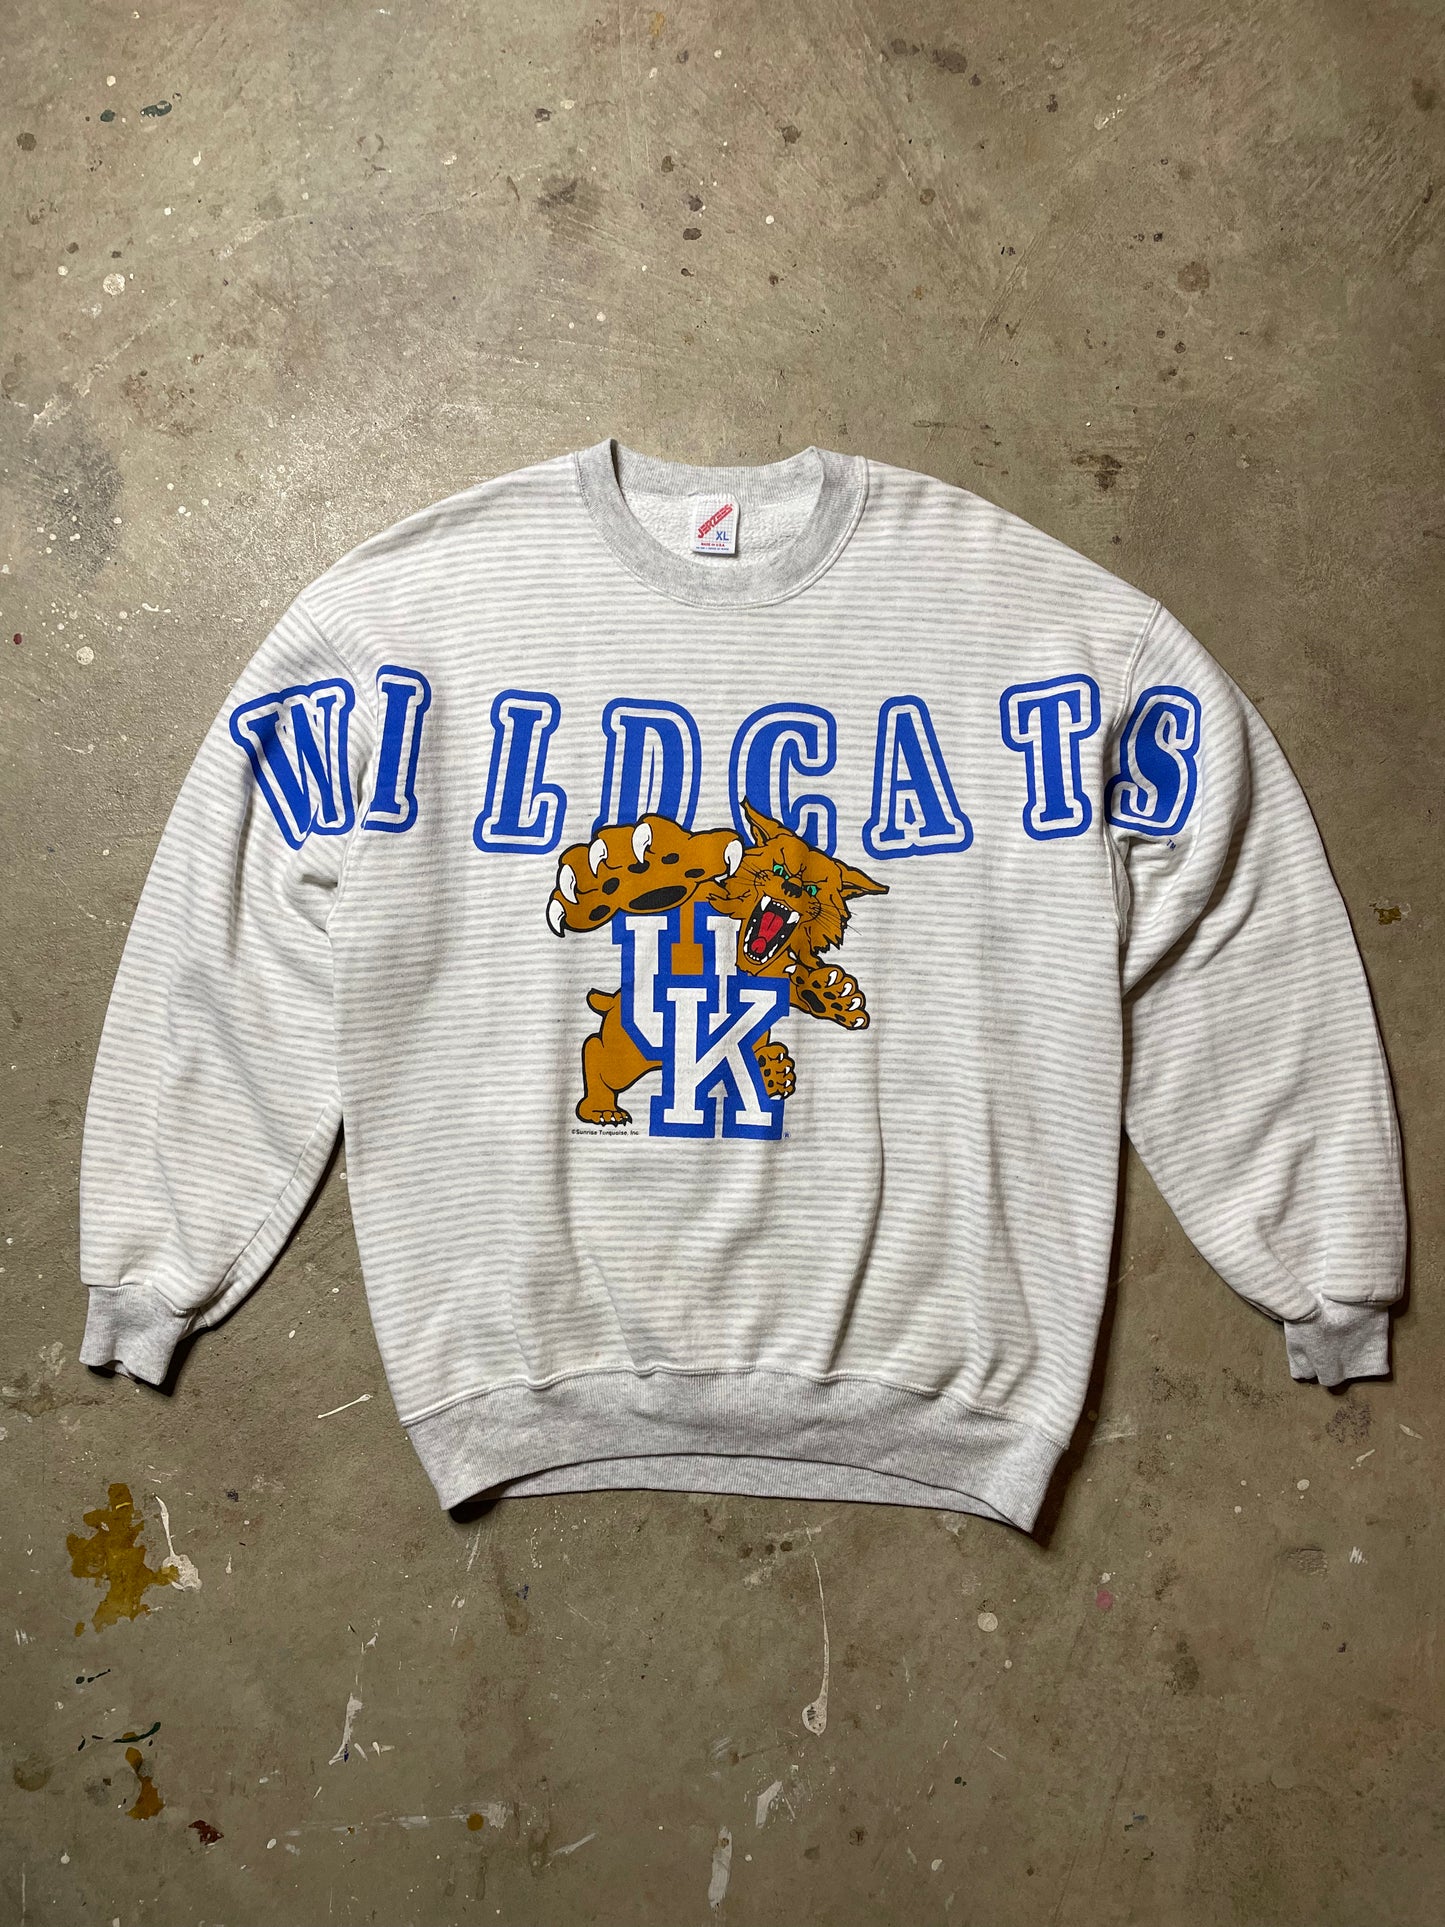 1990s Kentucky Wildcats Crewneck